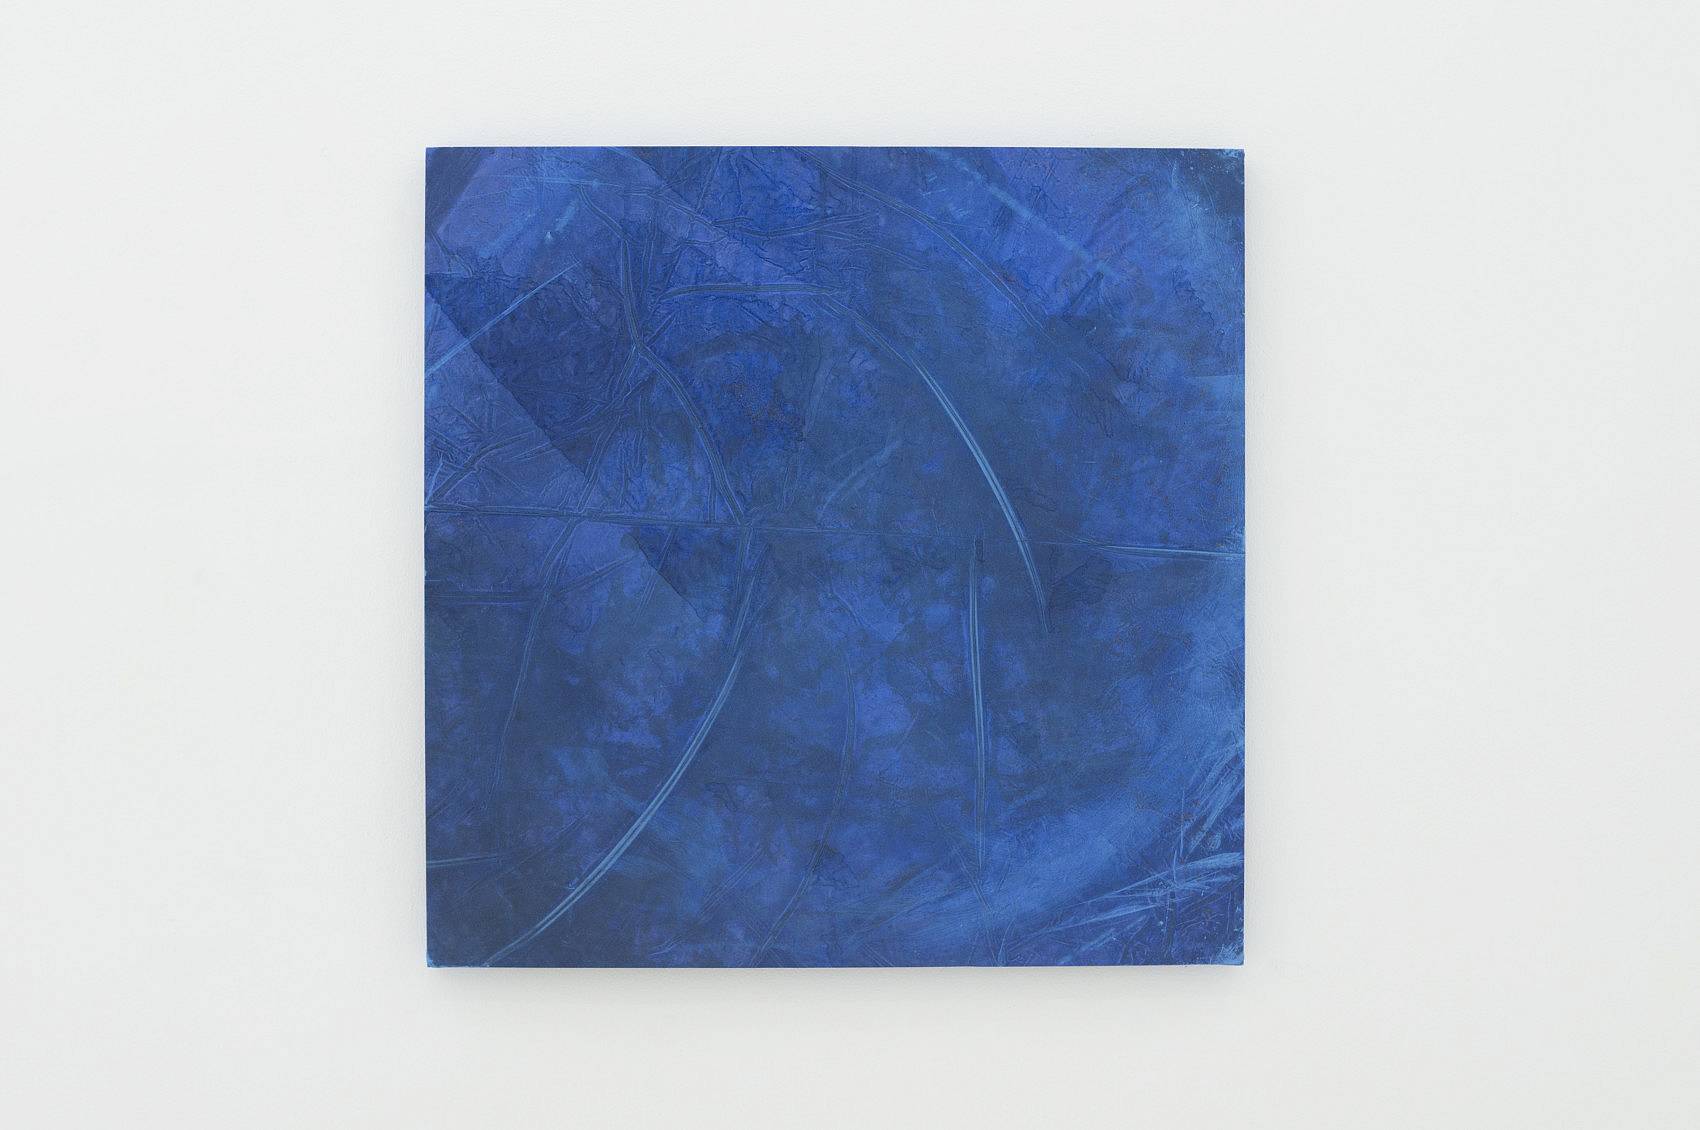 After Bath, latex pool bottom, blue and black ink deposit, 95 x 95 cm, 2016